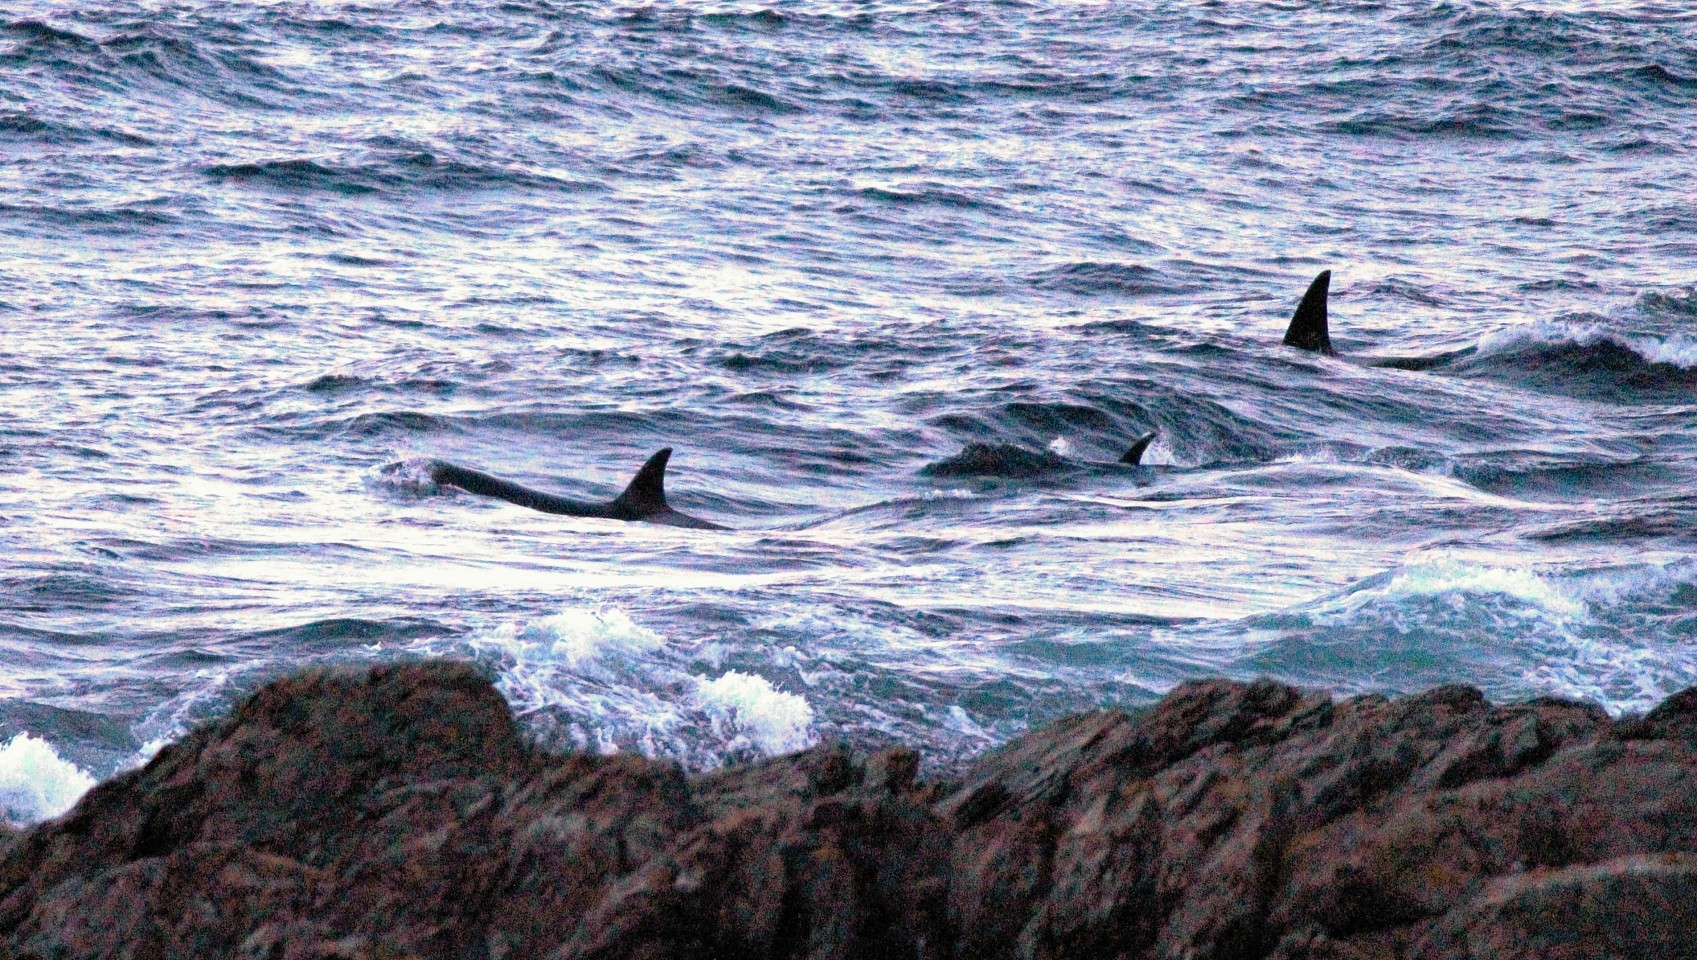 Killer whales off North East coast. David Beedie